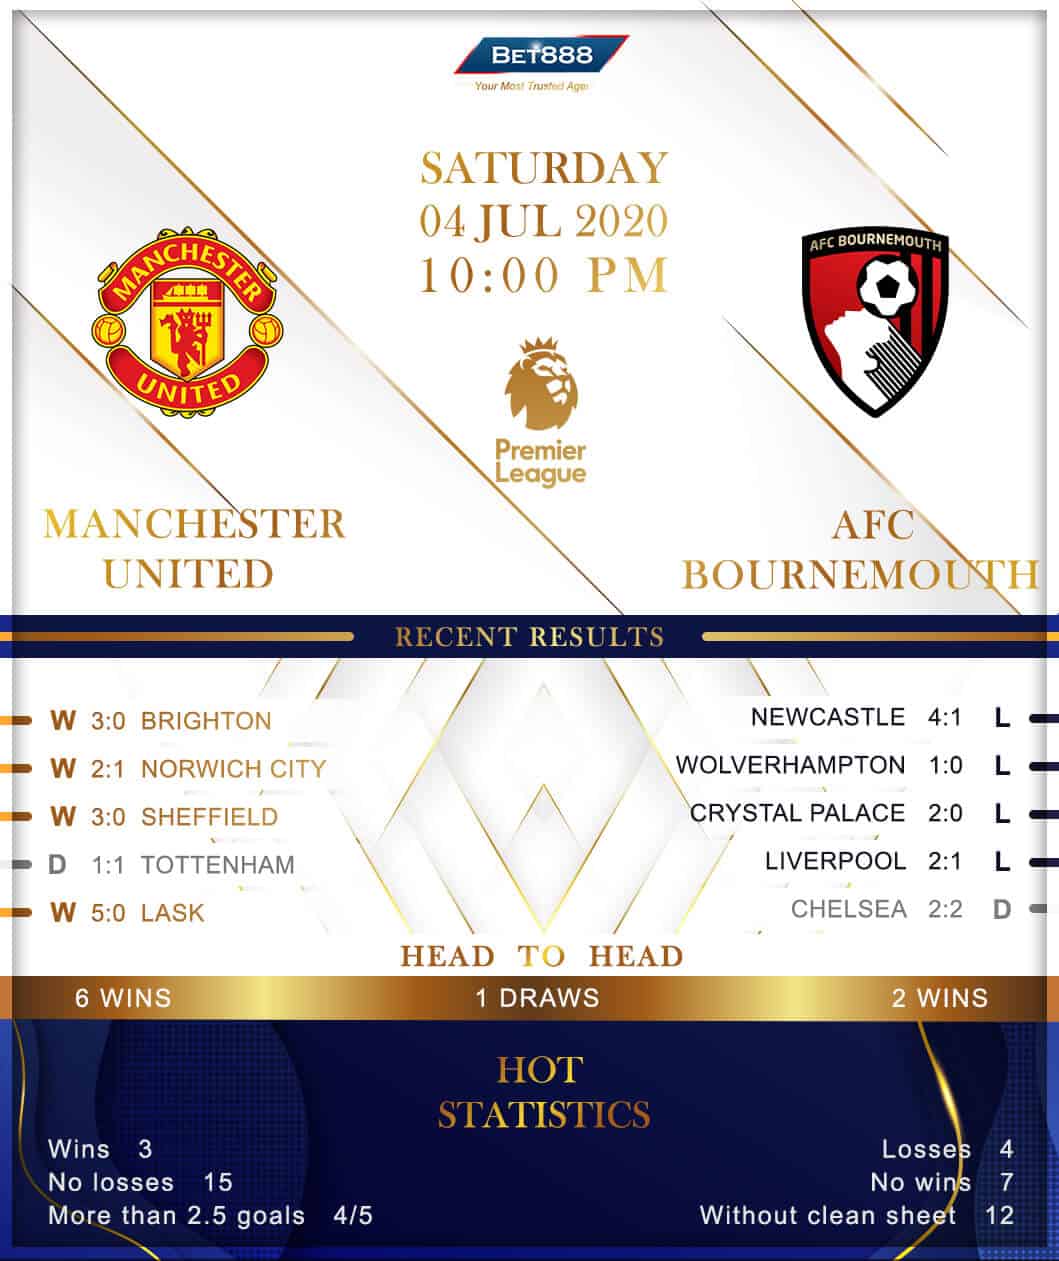 Manchester United vs Bournemouth 04/07/20